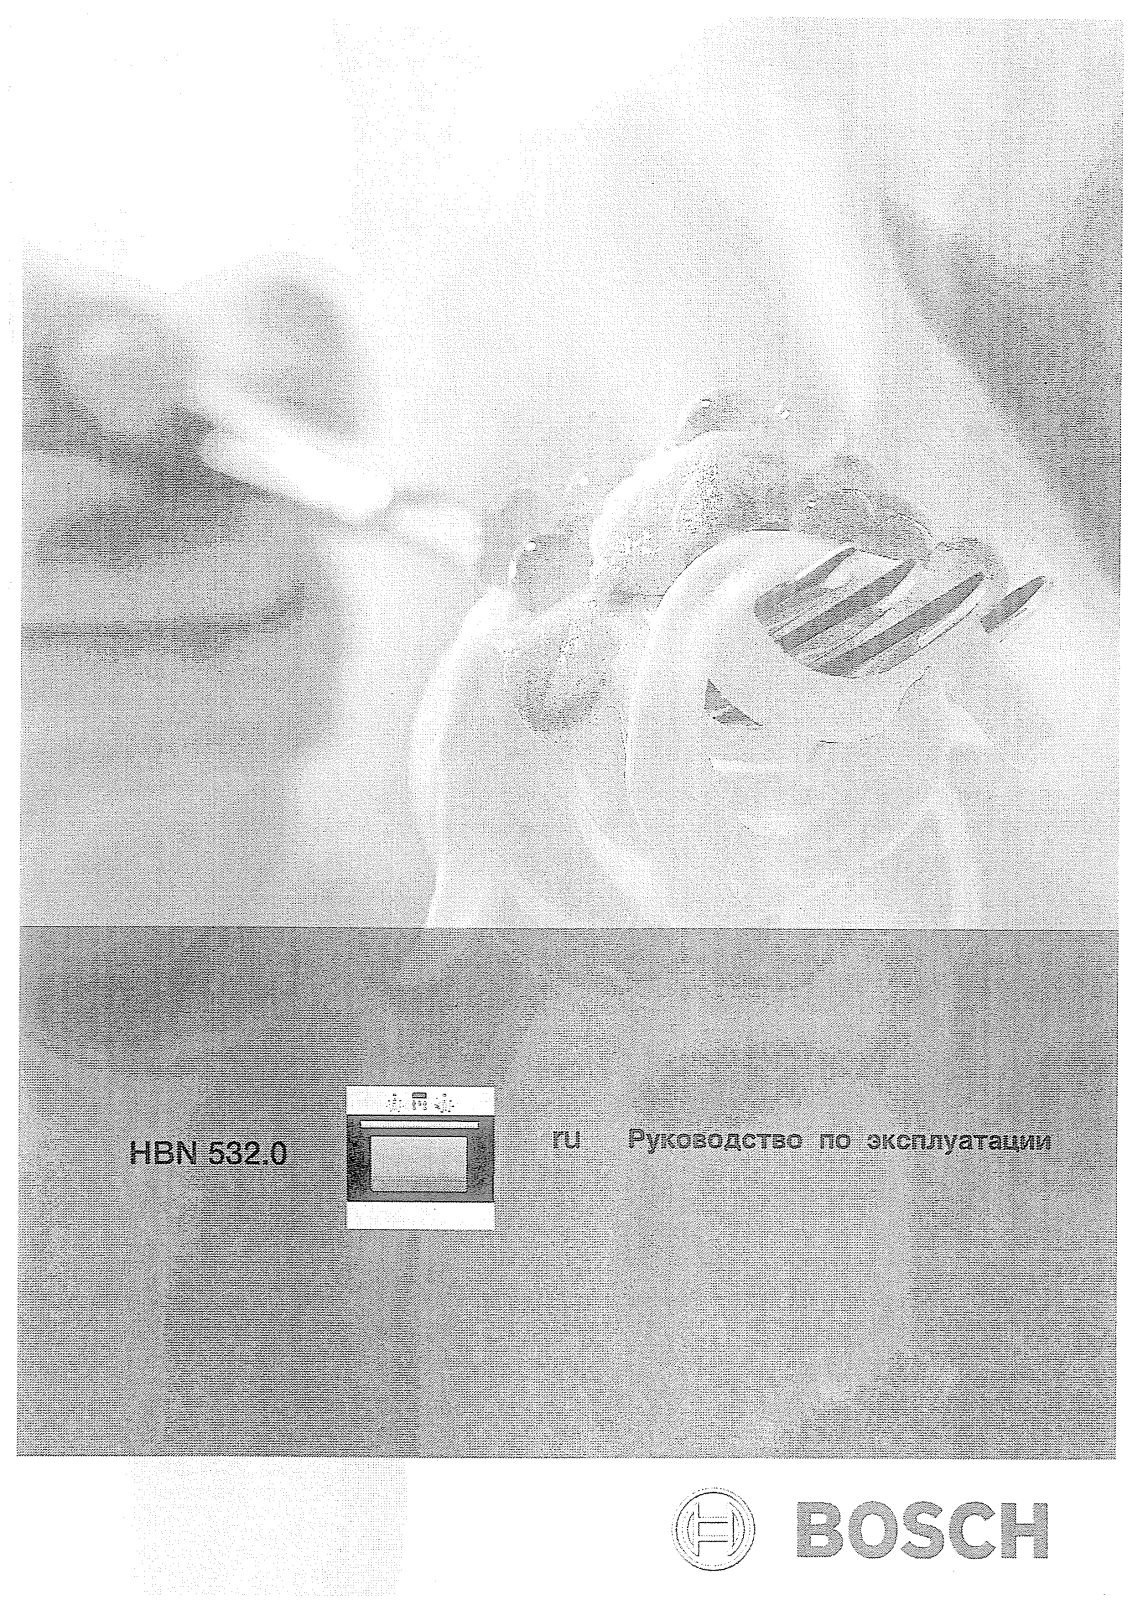 Bosch HBN 532 EO User Manual